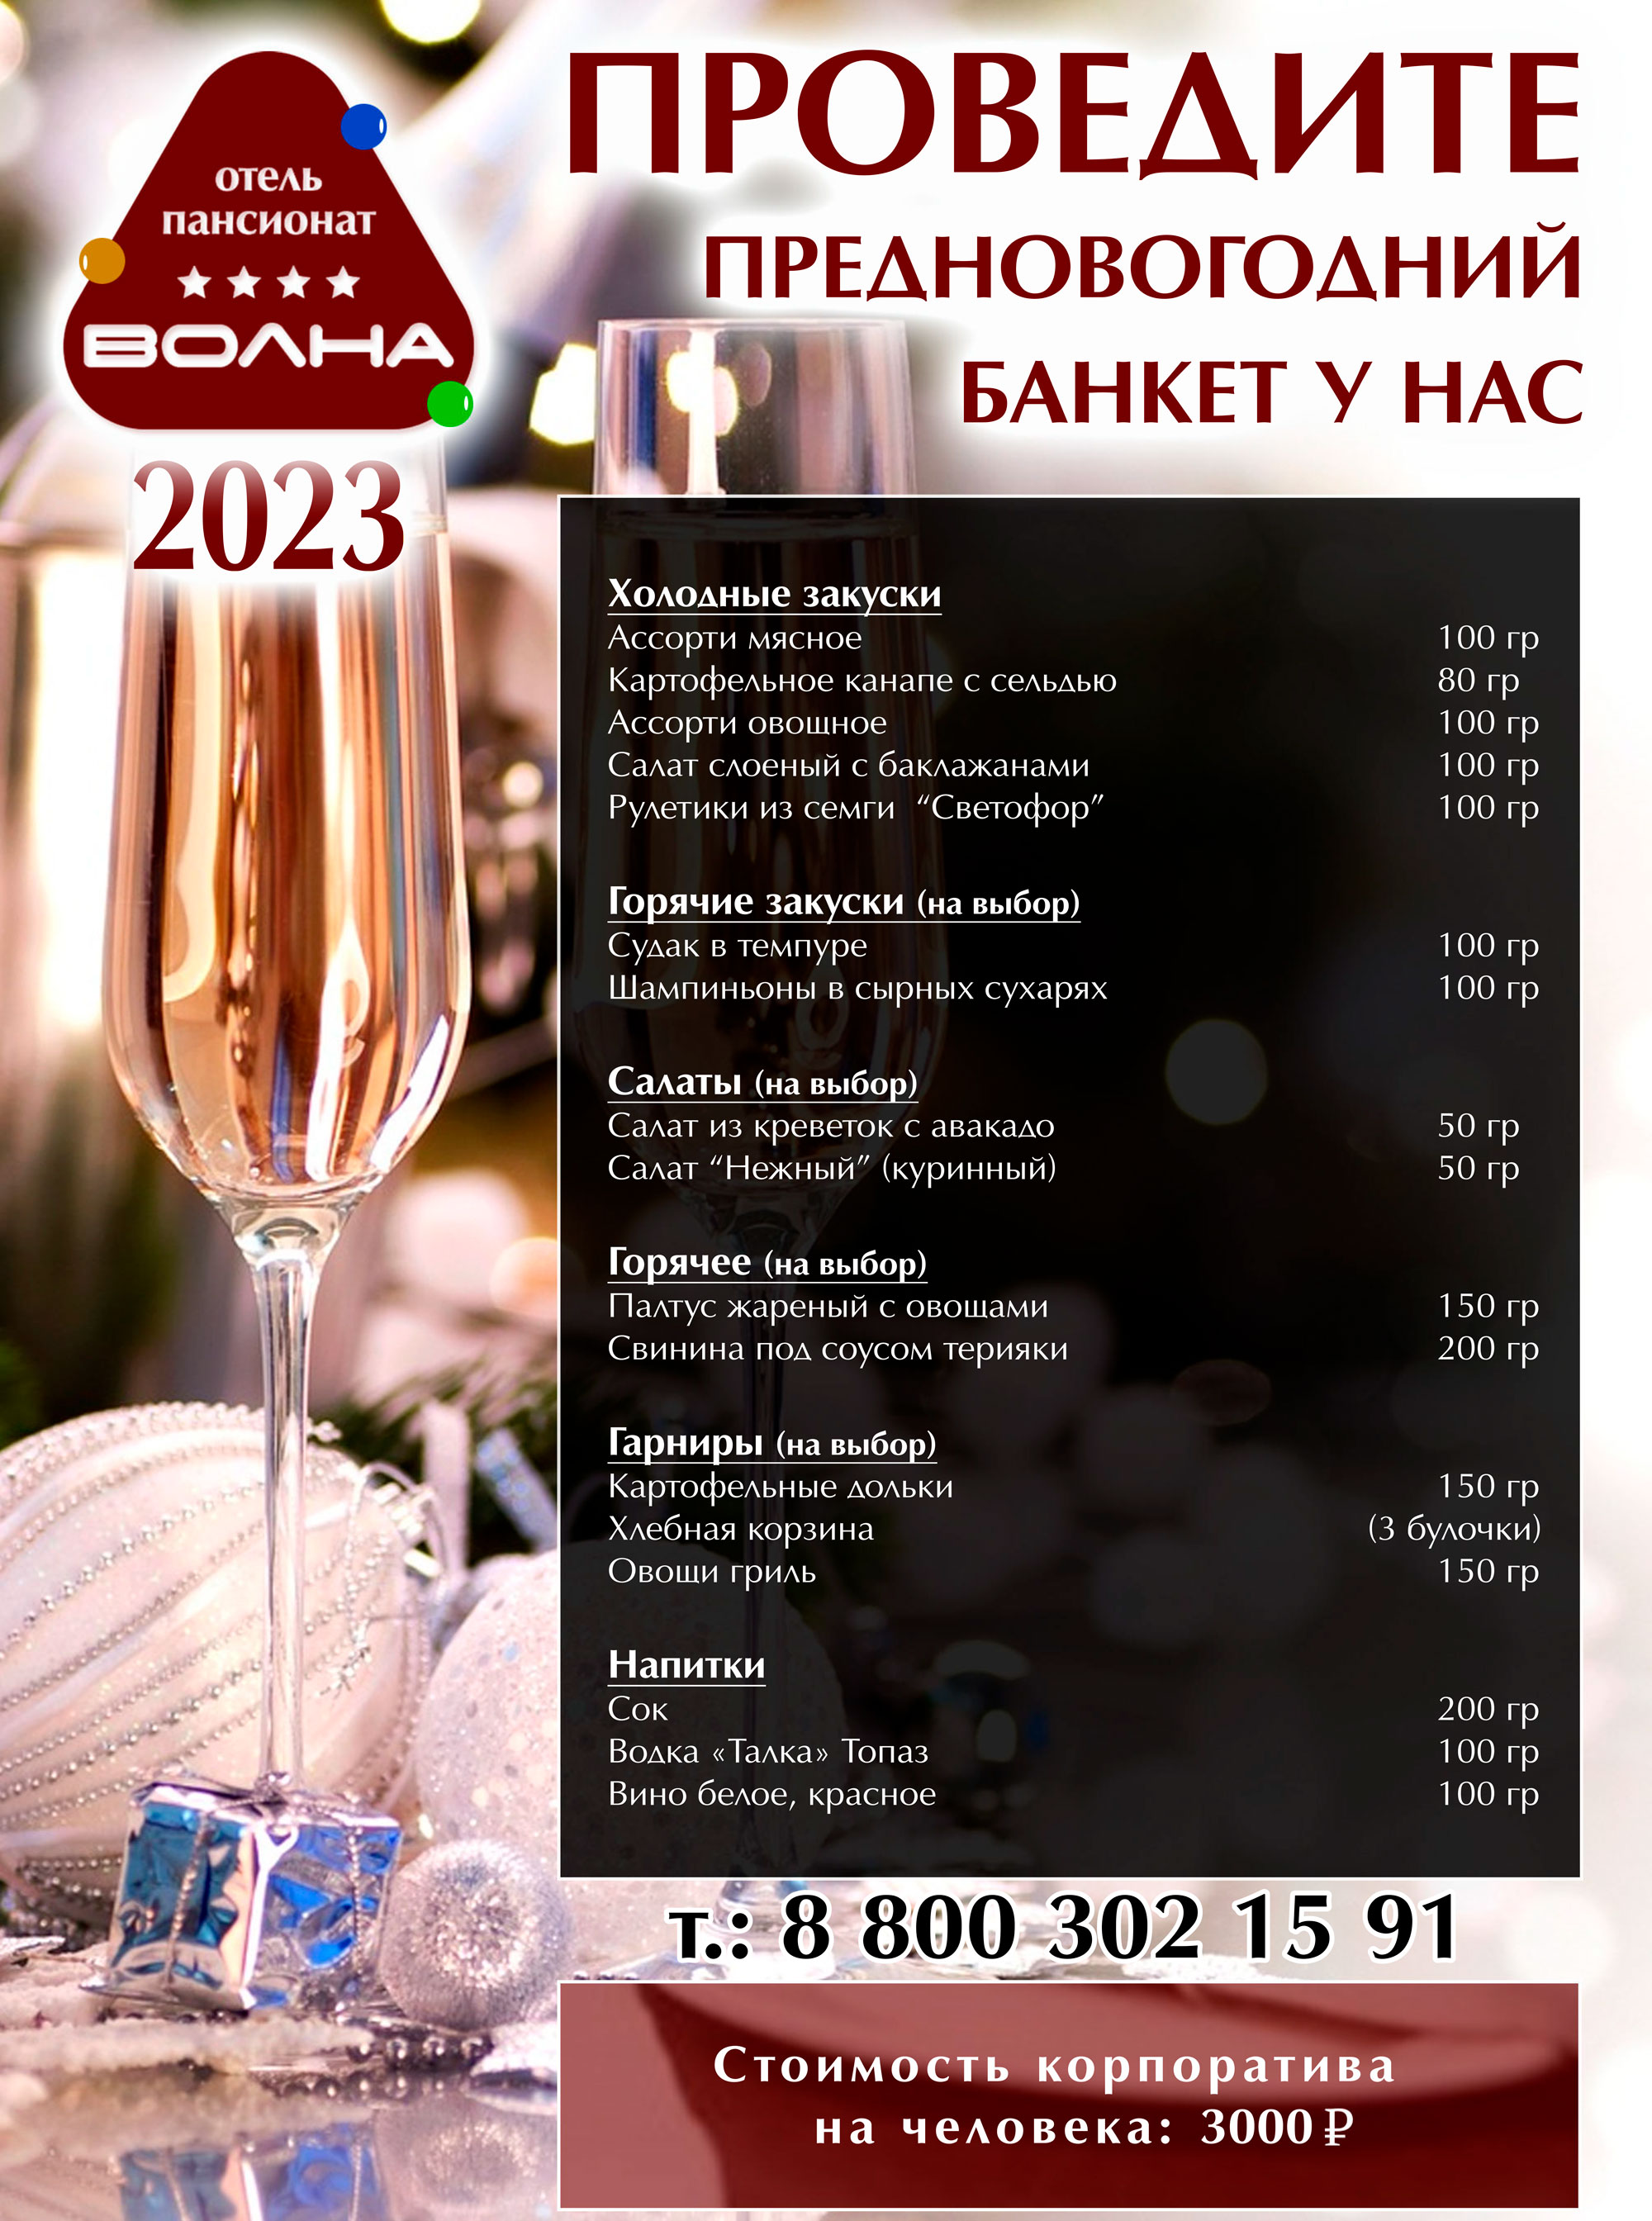 new year2023 menu